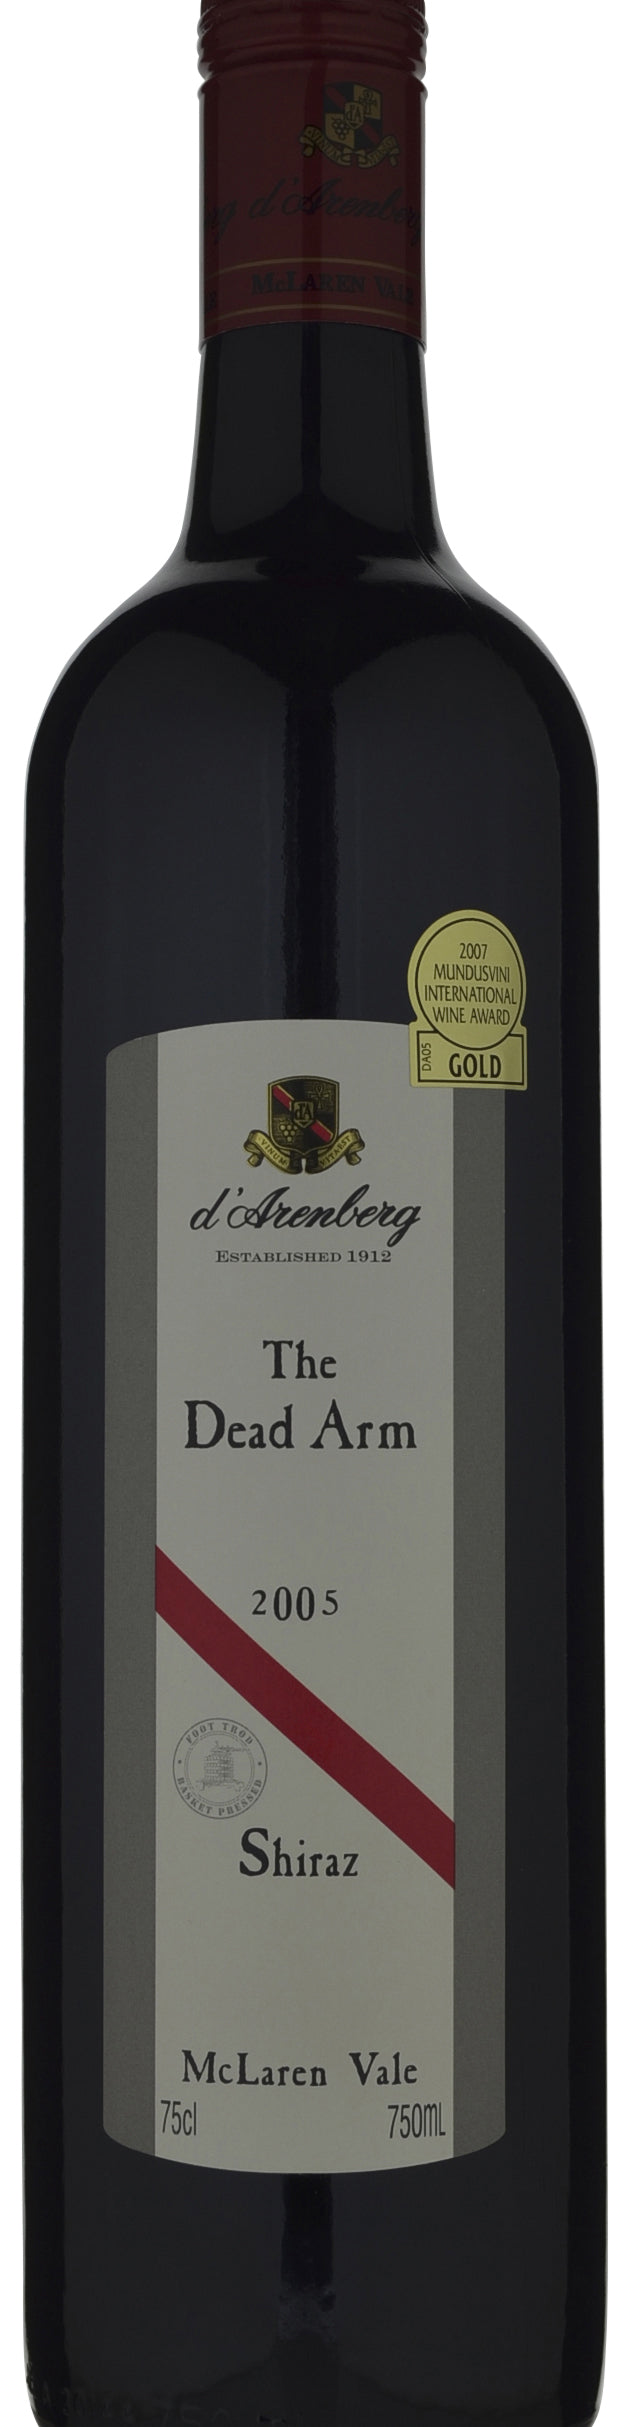 d'Arenberg The Dead Arm Shiraz 2005